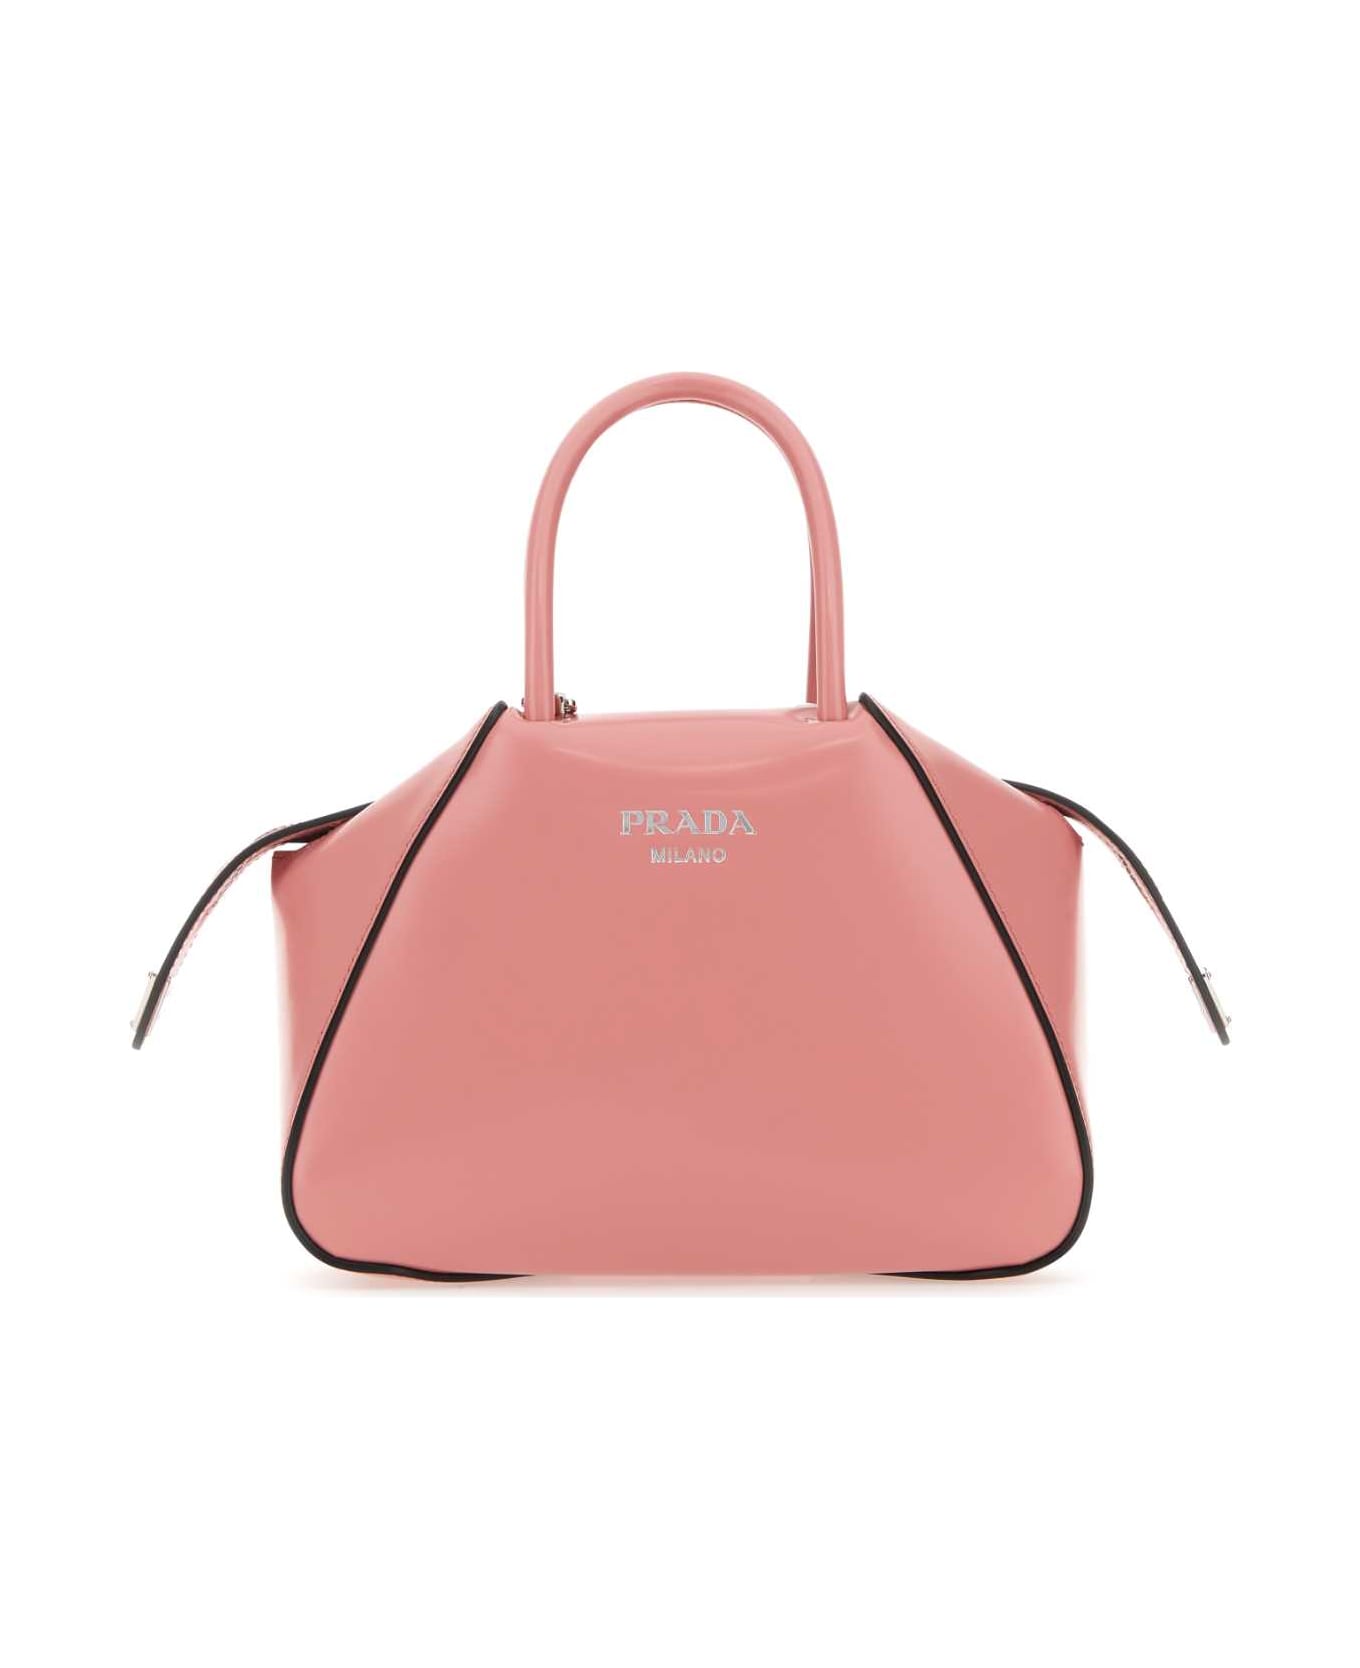 Prada Pink Leather Handbag - PETALO